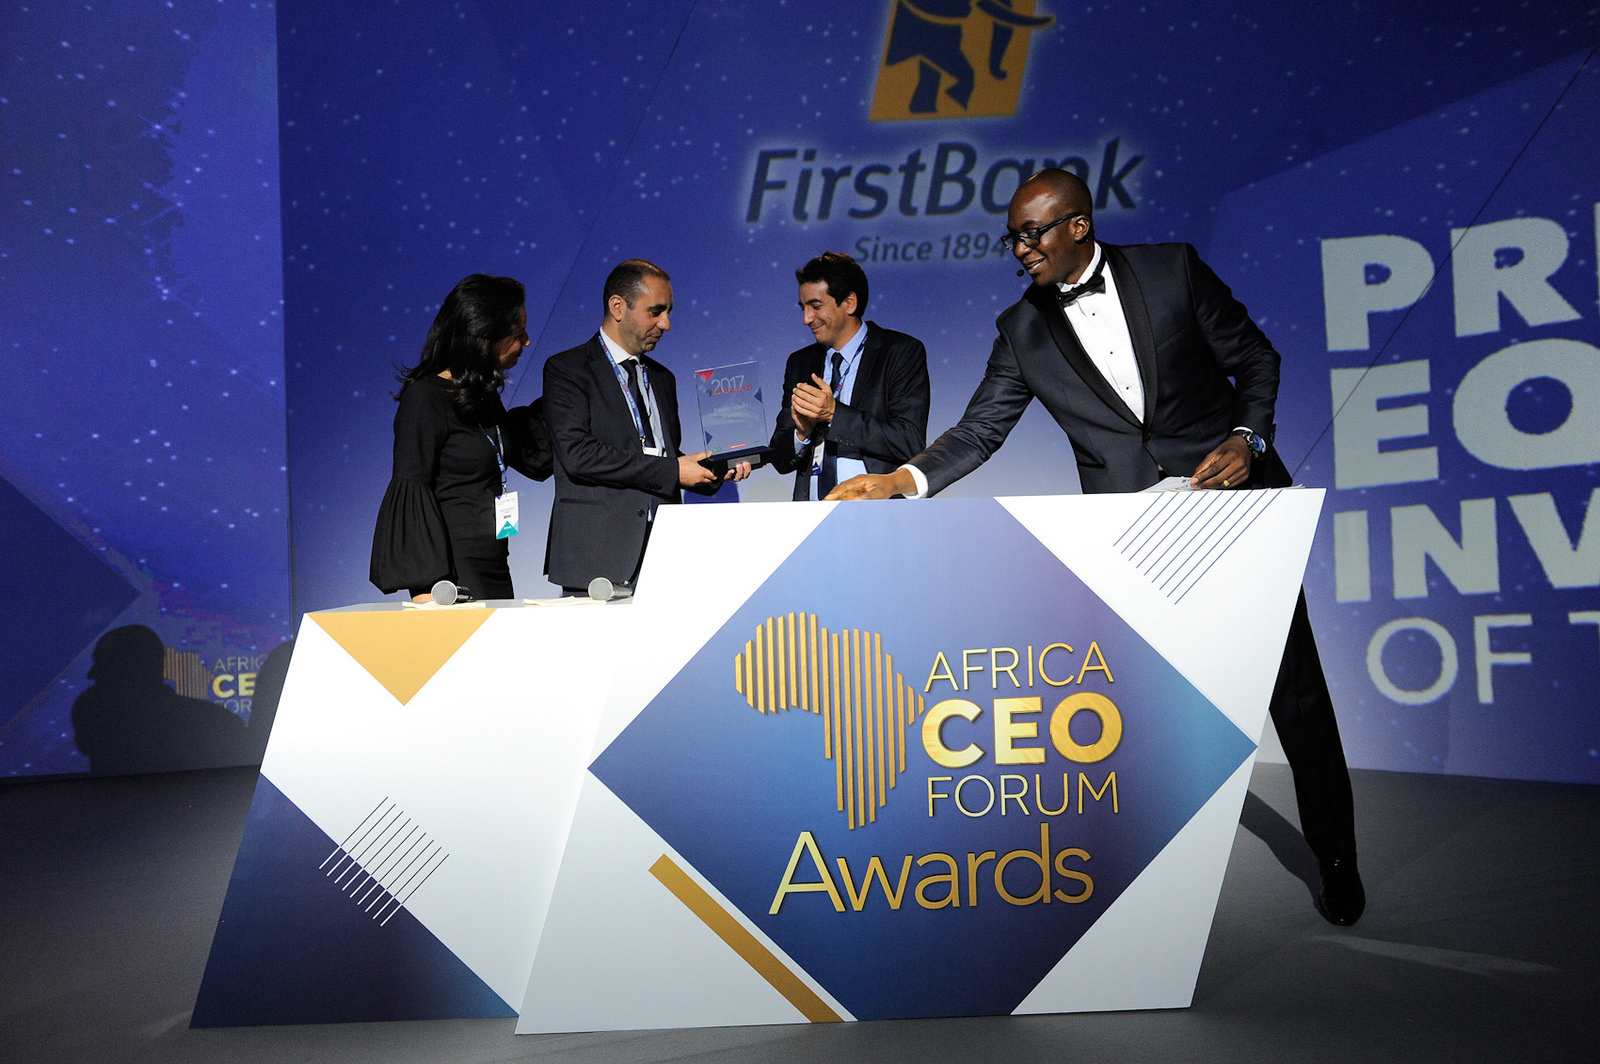 Africa CEO Forum 2017 - Dîner de Gala & Africa CEO Forum Awards. Crédits photo : DR